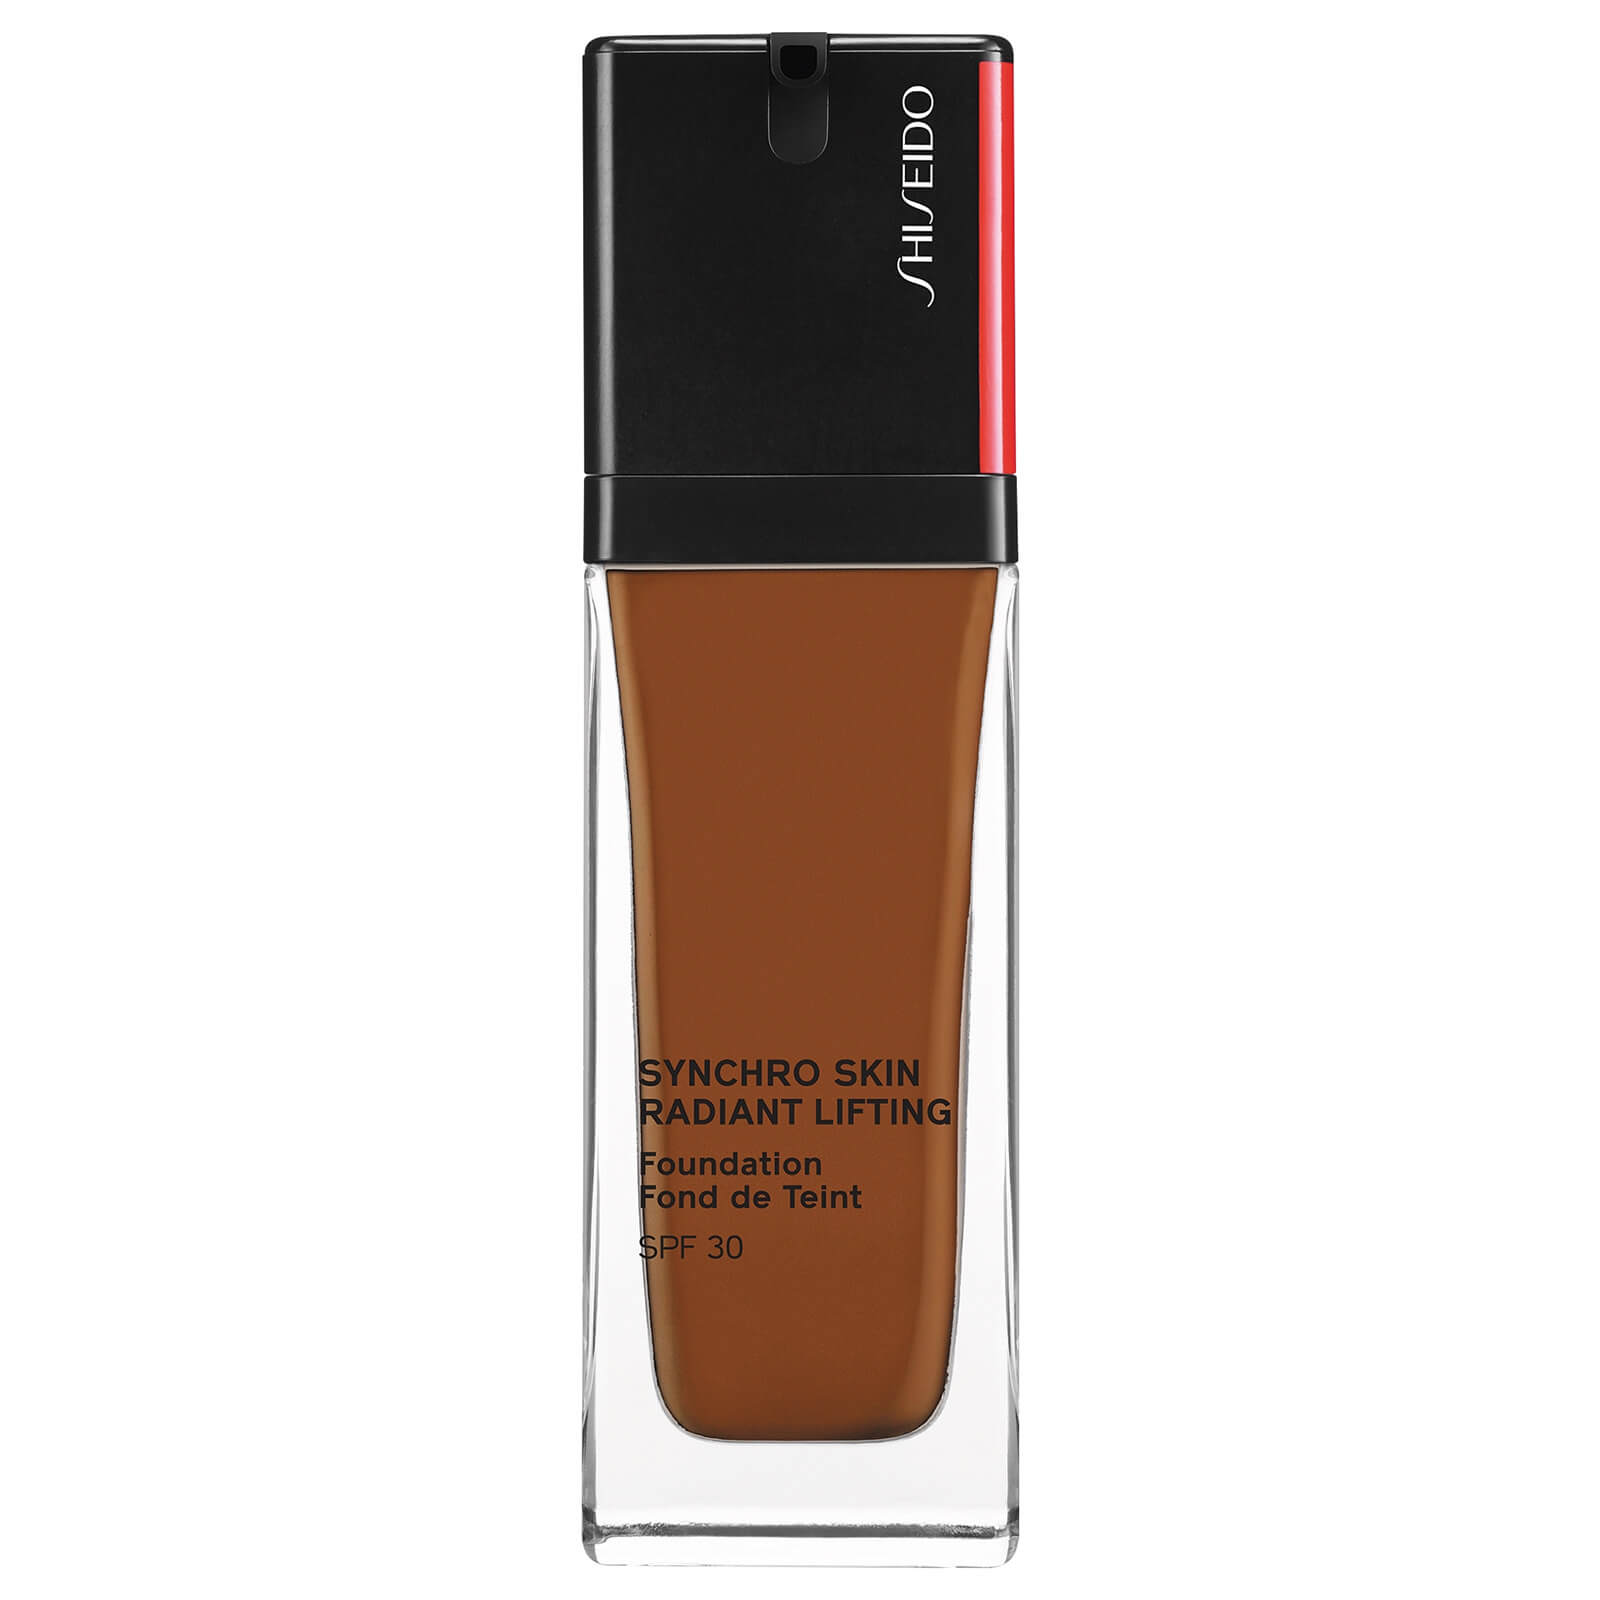 Shiseido Synchro Skin Radiant Lifting SPF30 Foundation 30ml (Various Shades) - 530 Henna von Shiseido